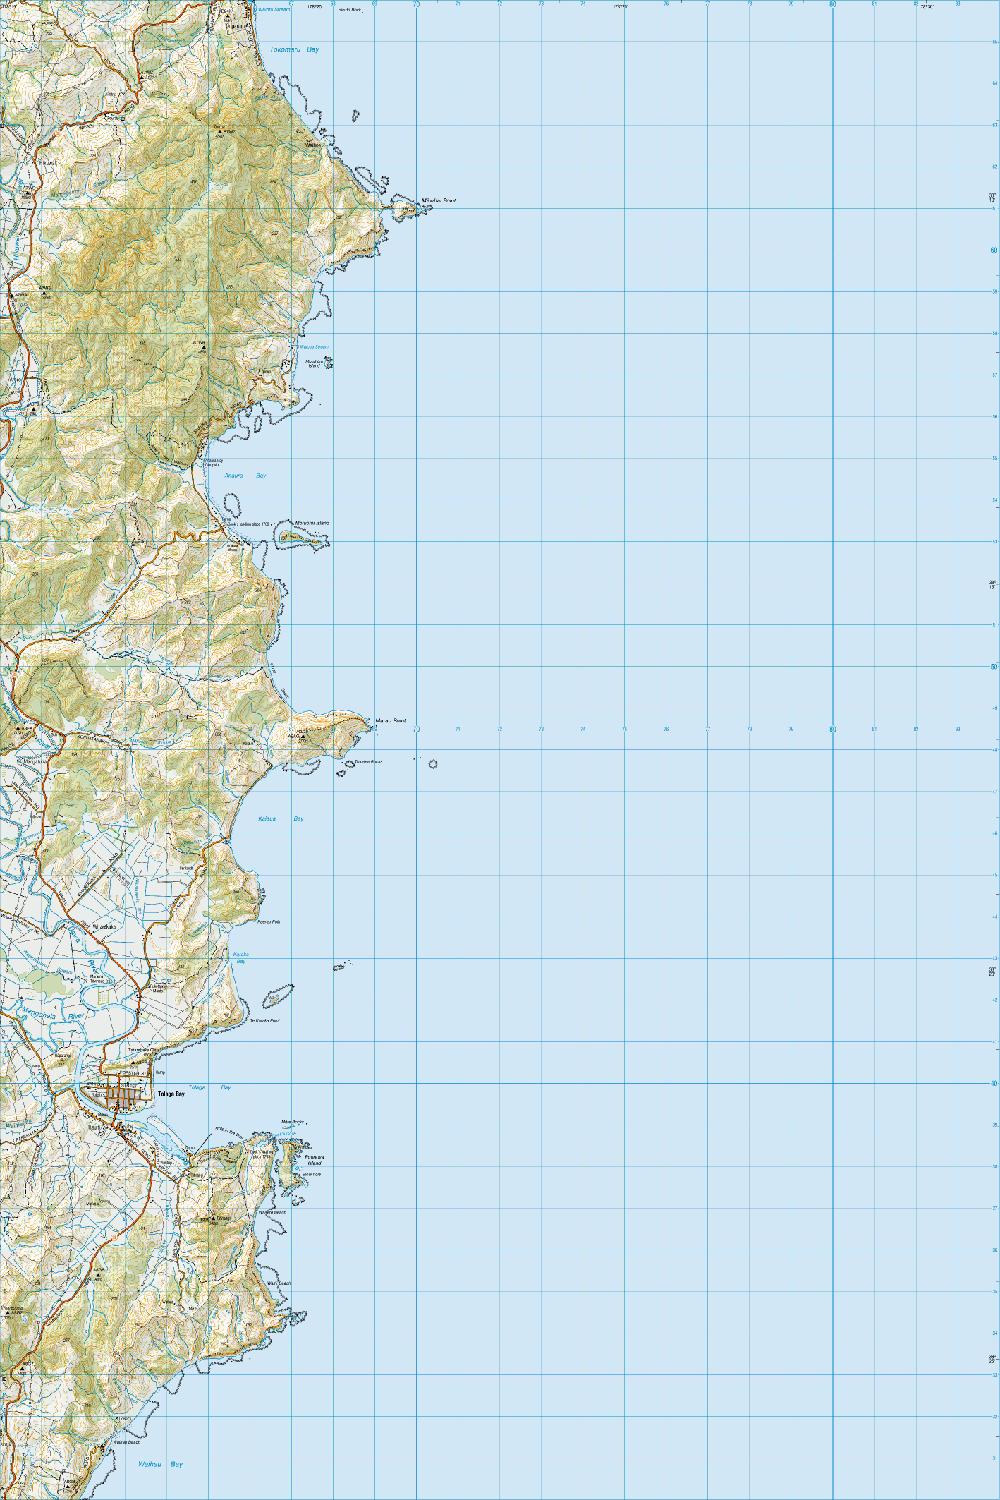 Topo map of Marau Point